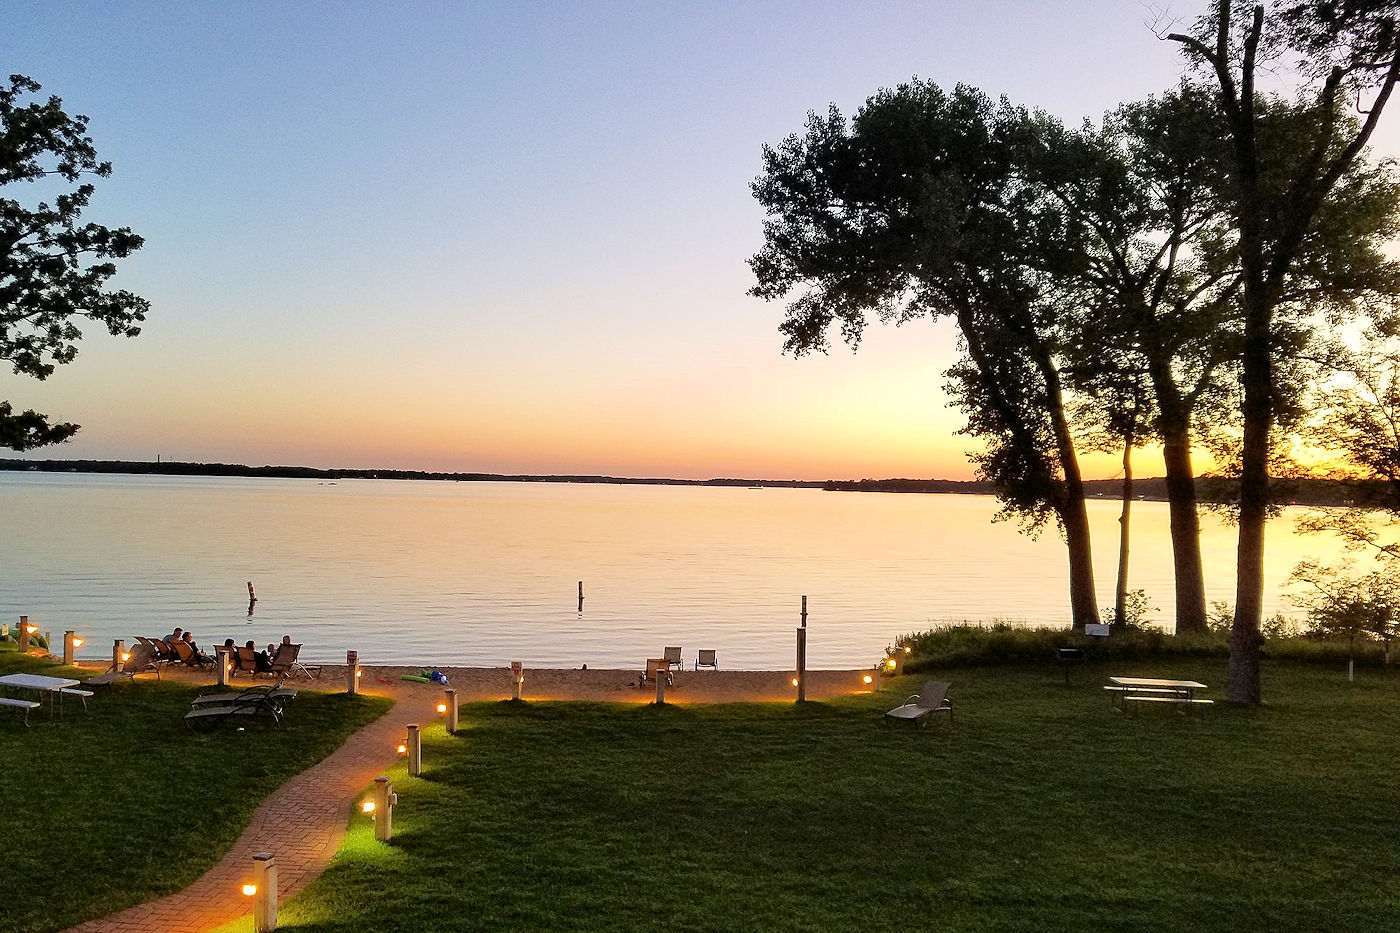 October 22, 2018 Big Detroit Lake Sunset at The Lodge on Lake Detroit